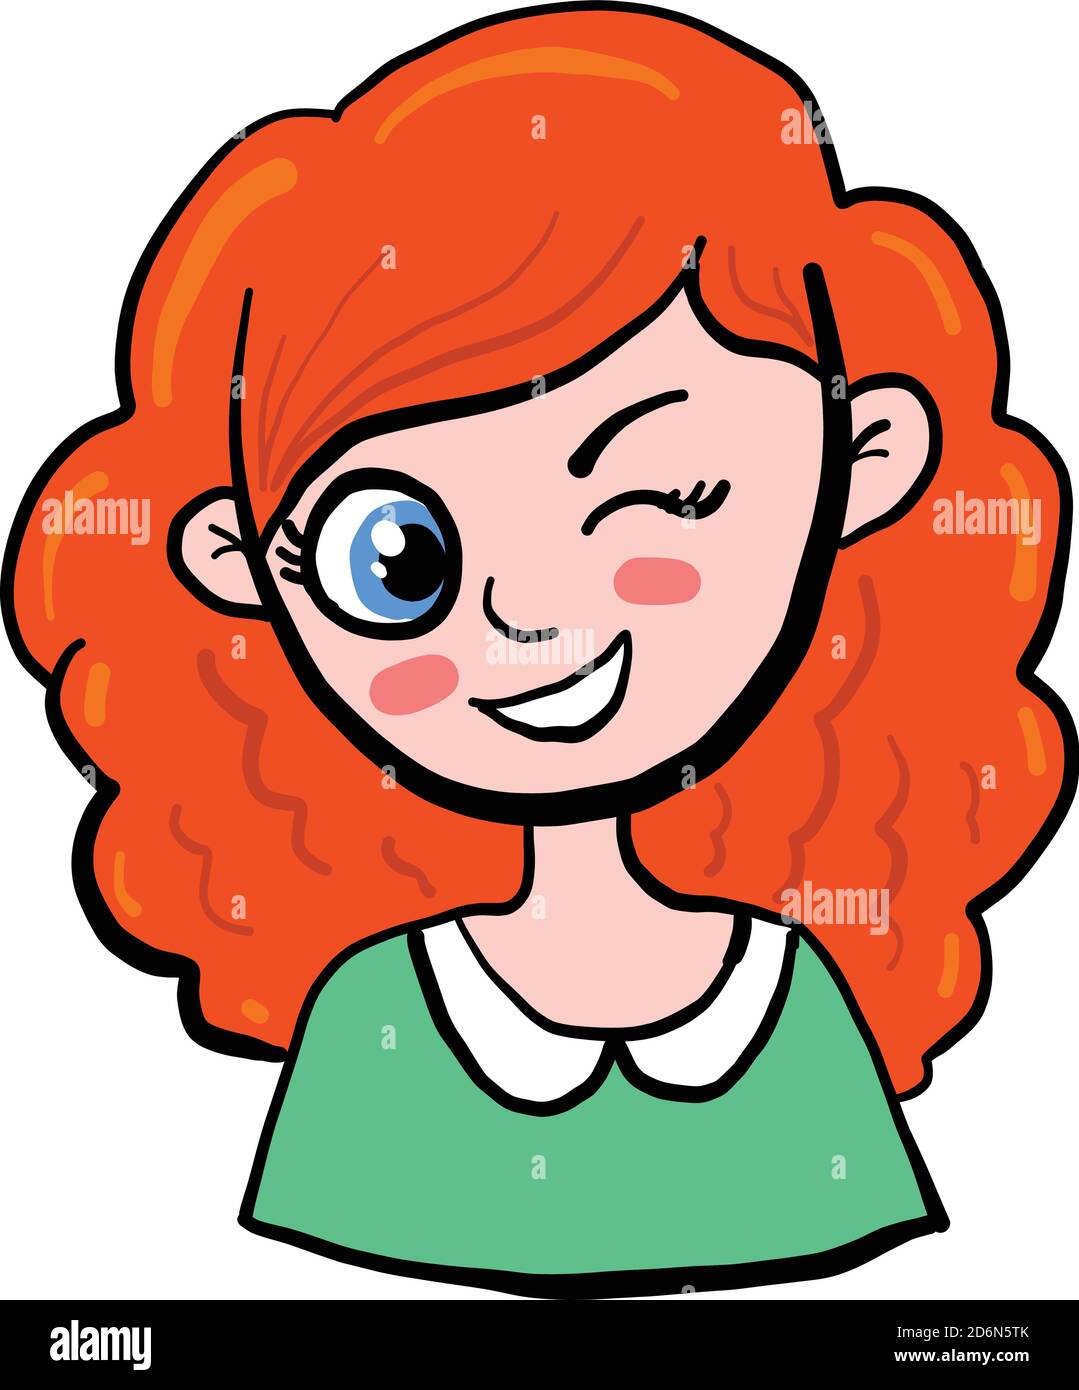 Hairy Redhead Woman